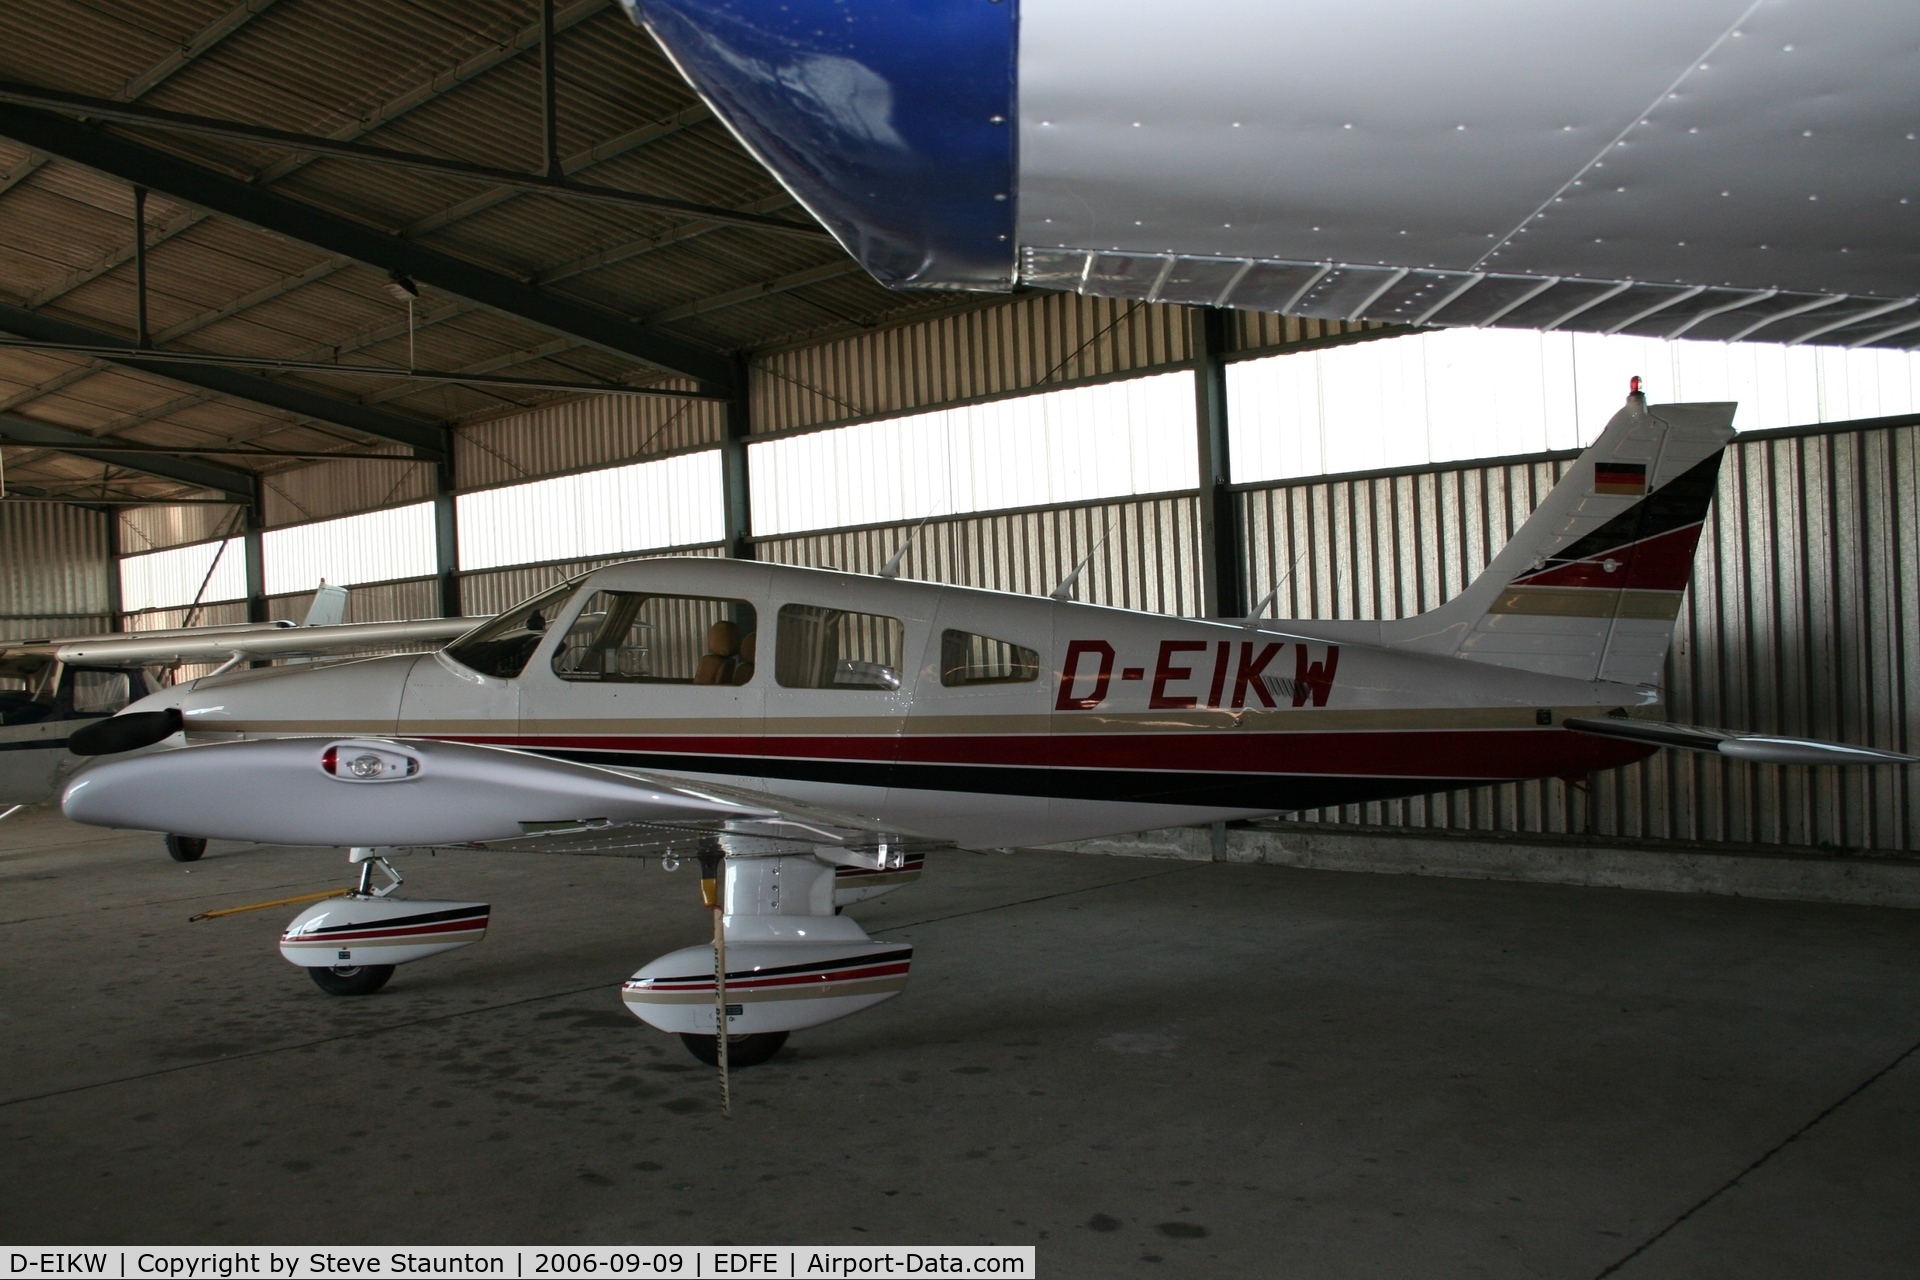 D-EIKW, 1981 Piper PA-28-236 Dakota C/N 28-8211013, Taken at Egelsbach September 2006